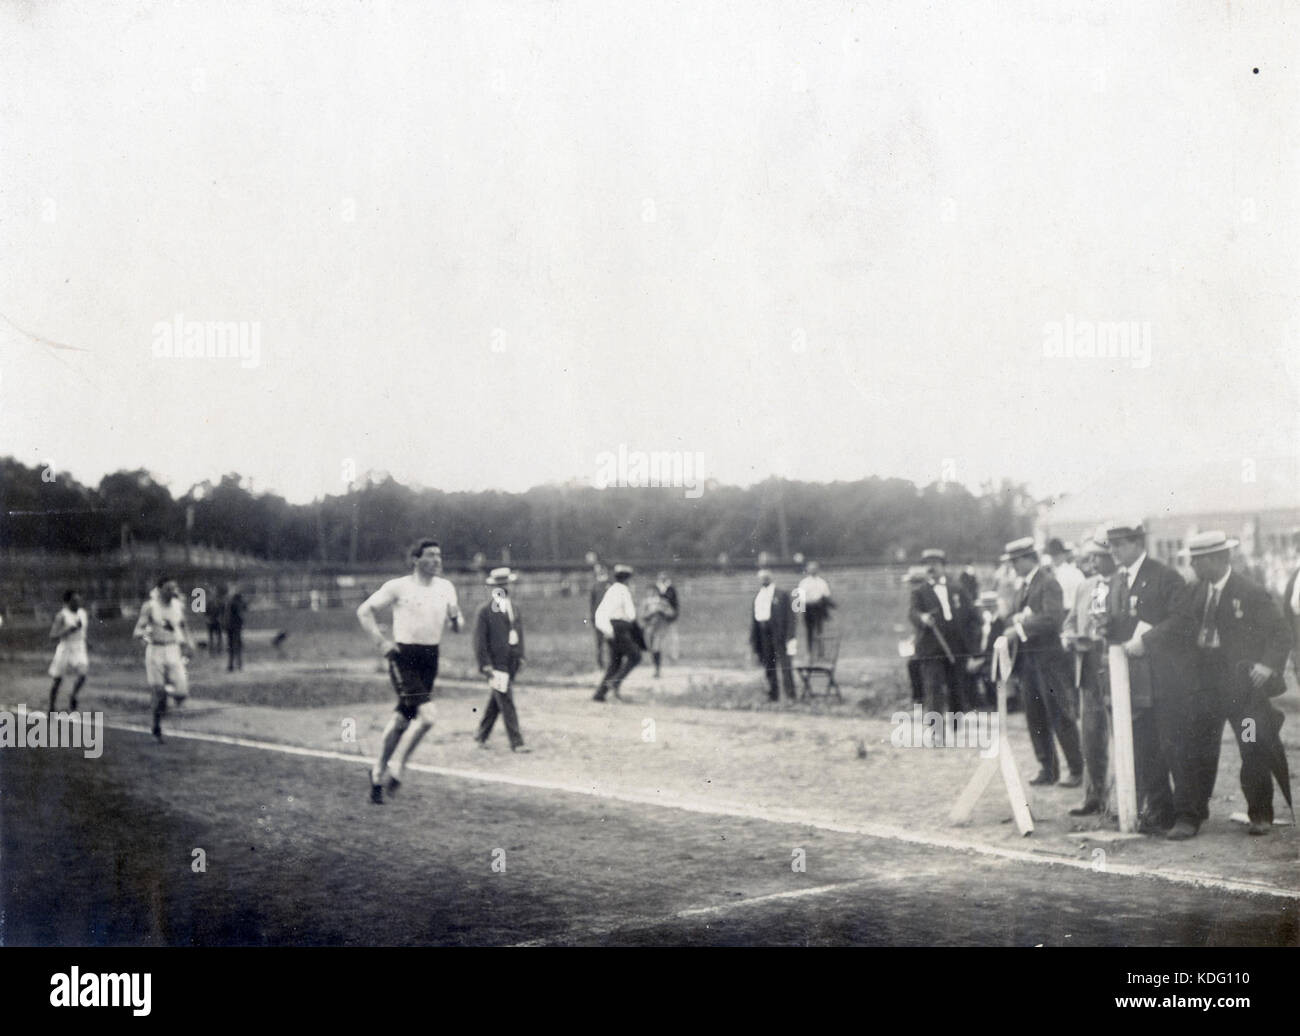 John J. Daly of Ireland winning the one mile handicap race at the 1904 Olympics Stock Photo